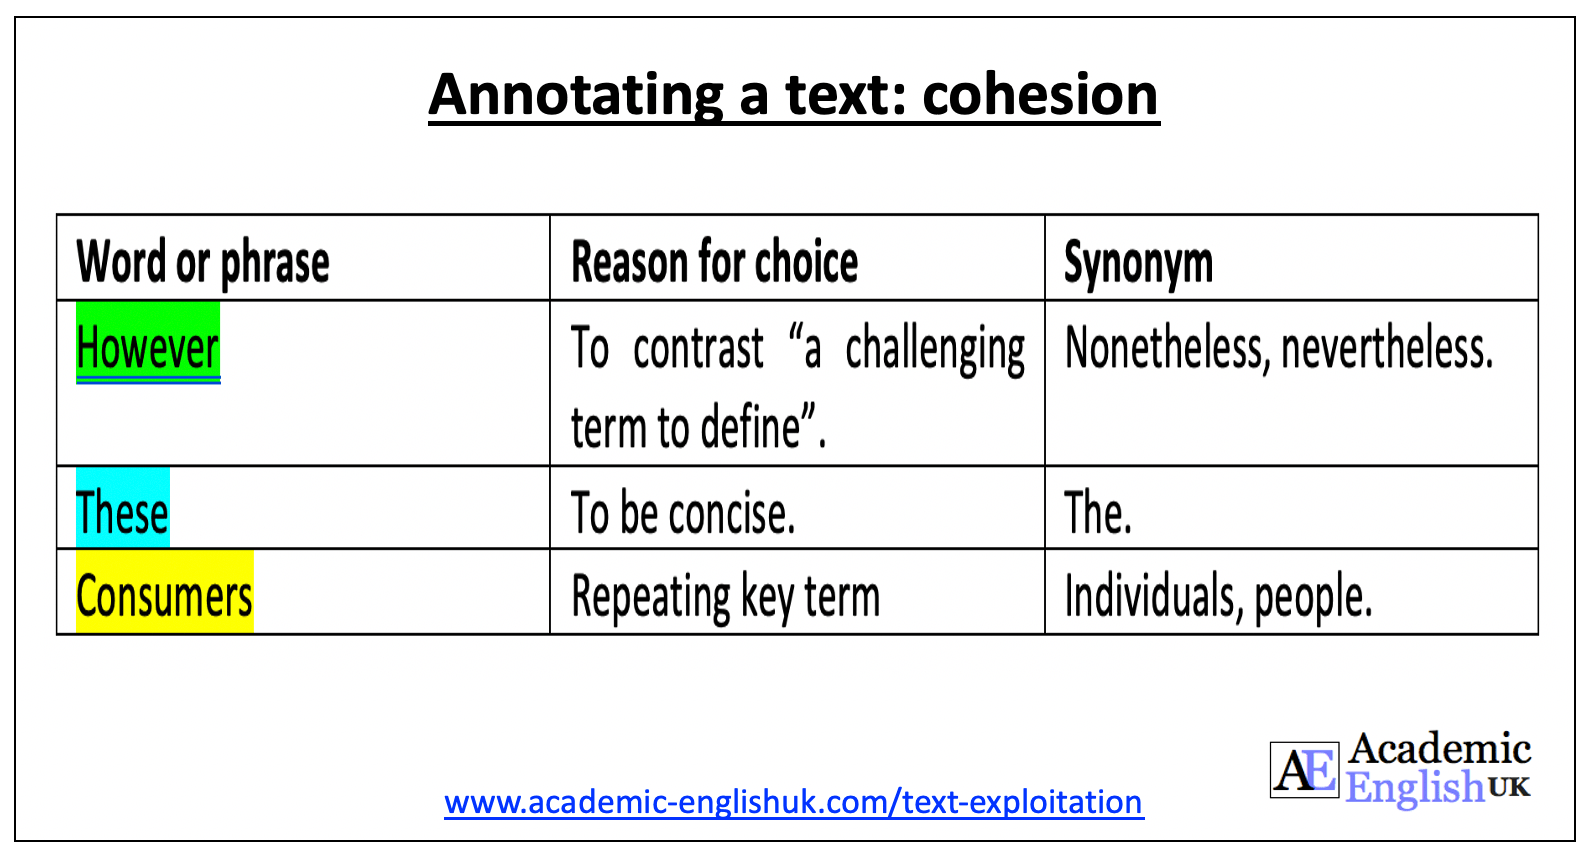 cohesion table academic English uk 